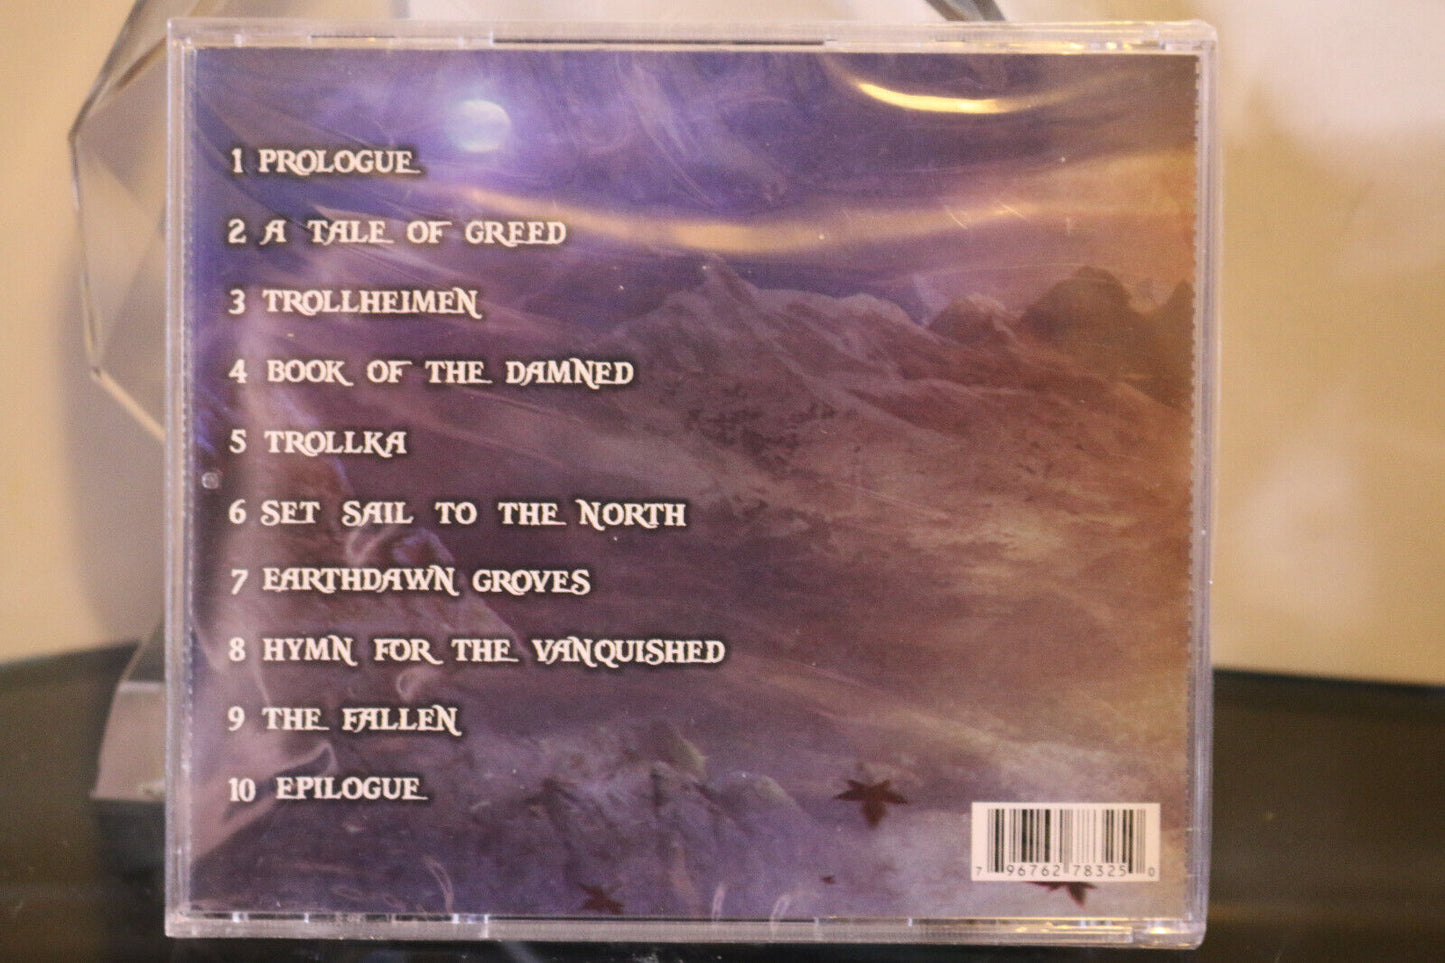 Troll War Earthdawn Groves Cd Music Rare Sealed Brand New Gothic Speed Metal